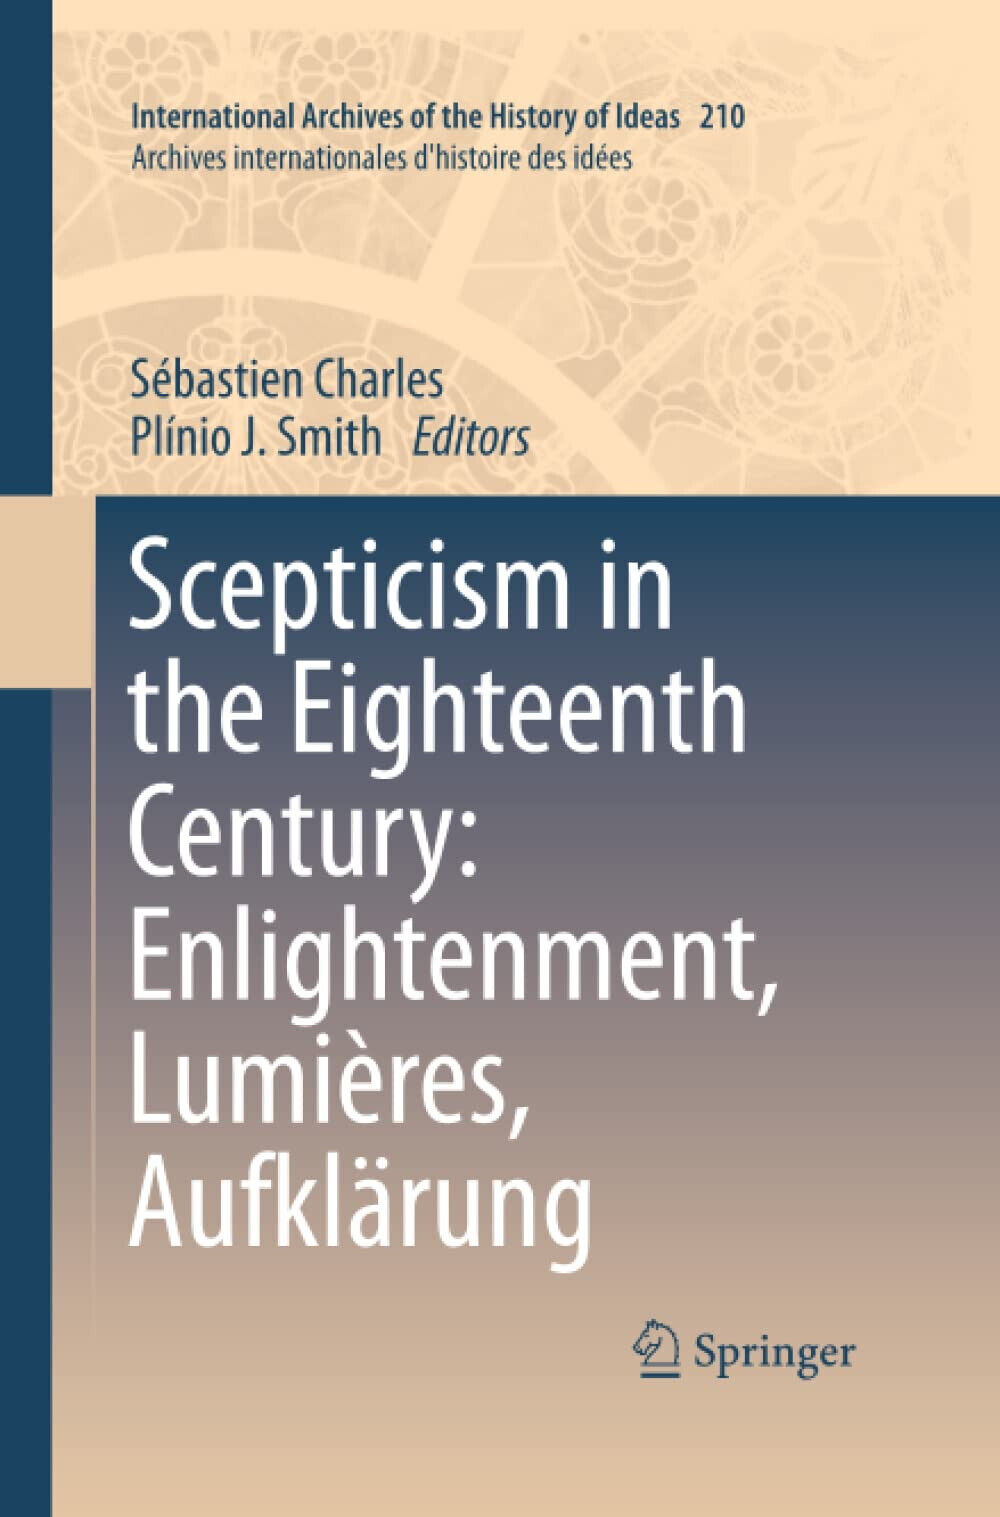 Scepticism in the Eighteenth Century - S?bastien Charles - Springer, 2015